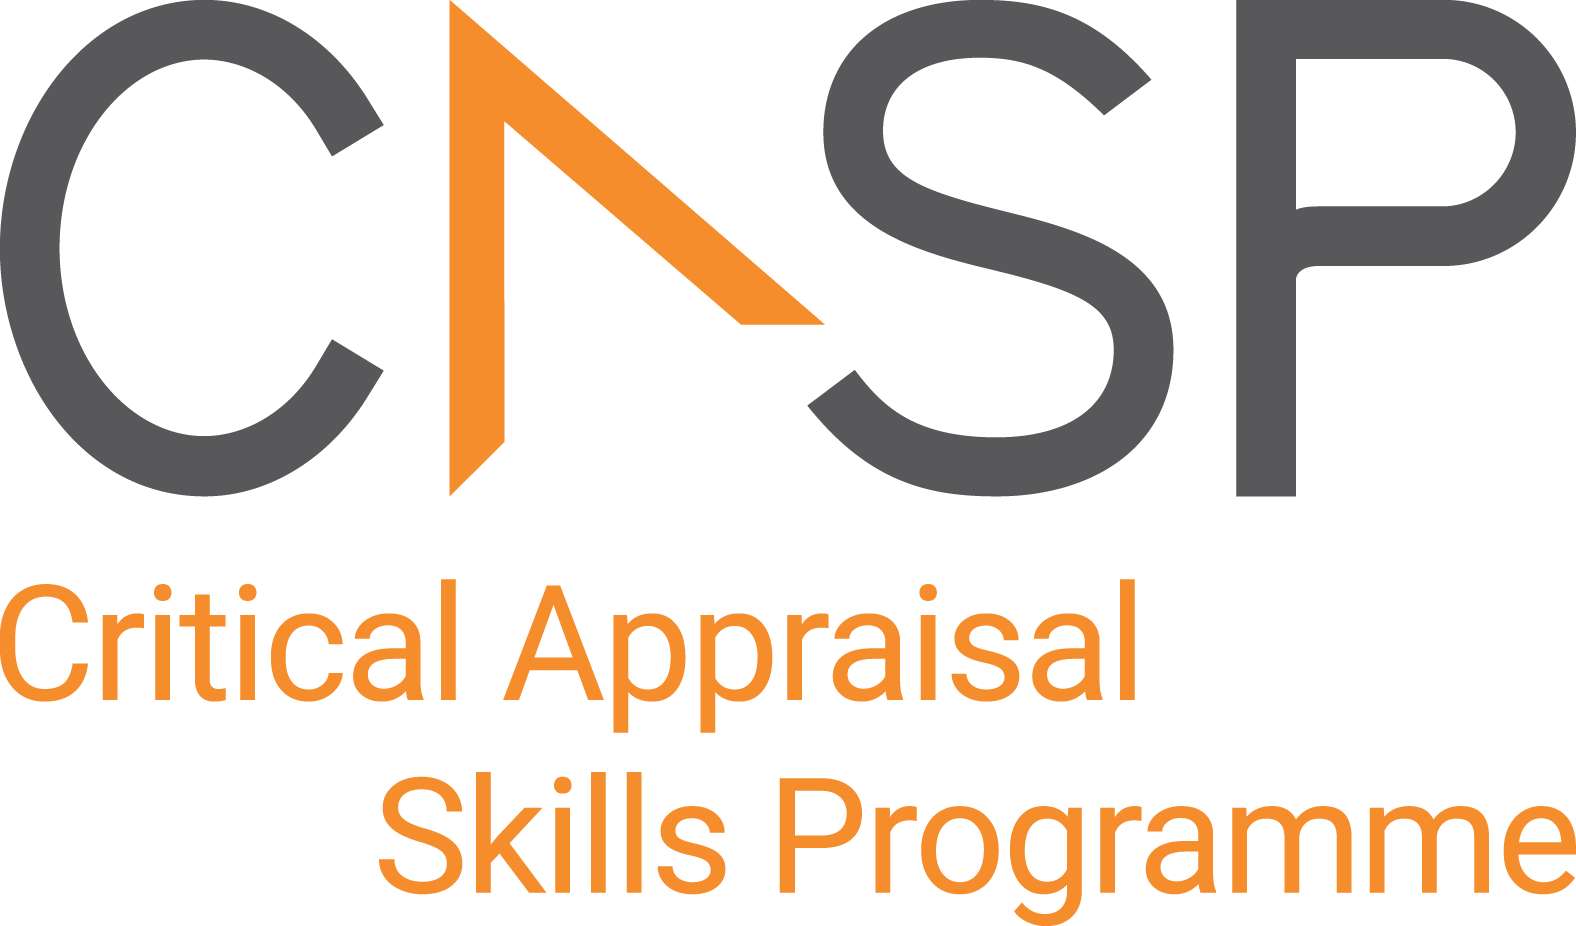 critical appraisal skills programme (casp) qualitative research checklist